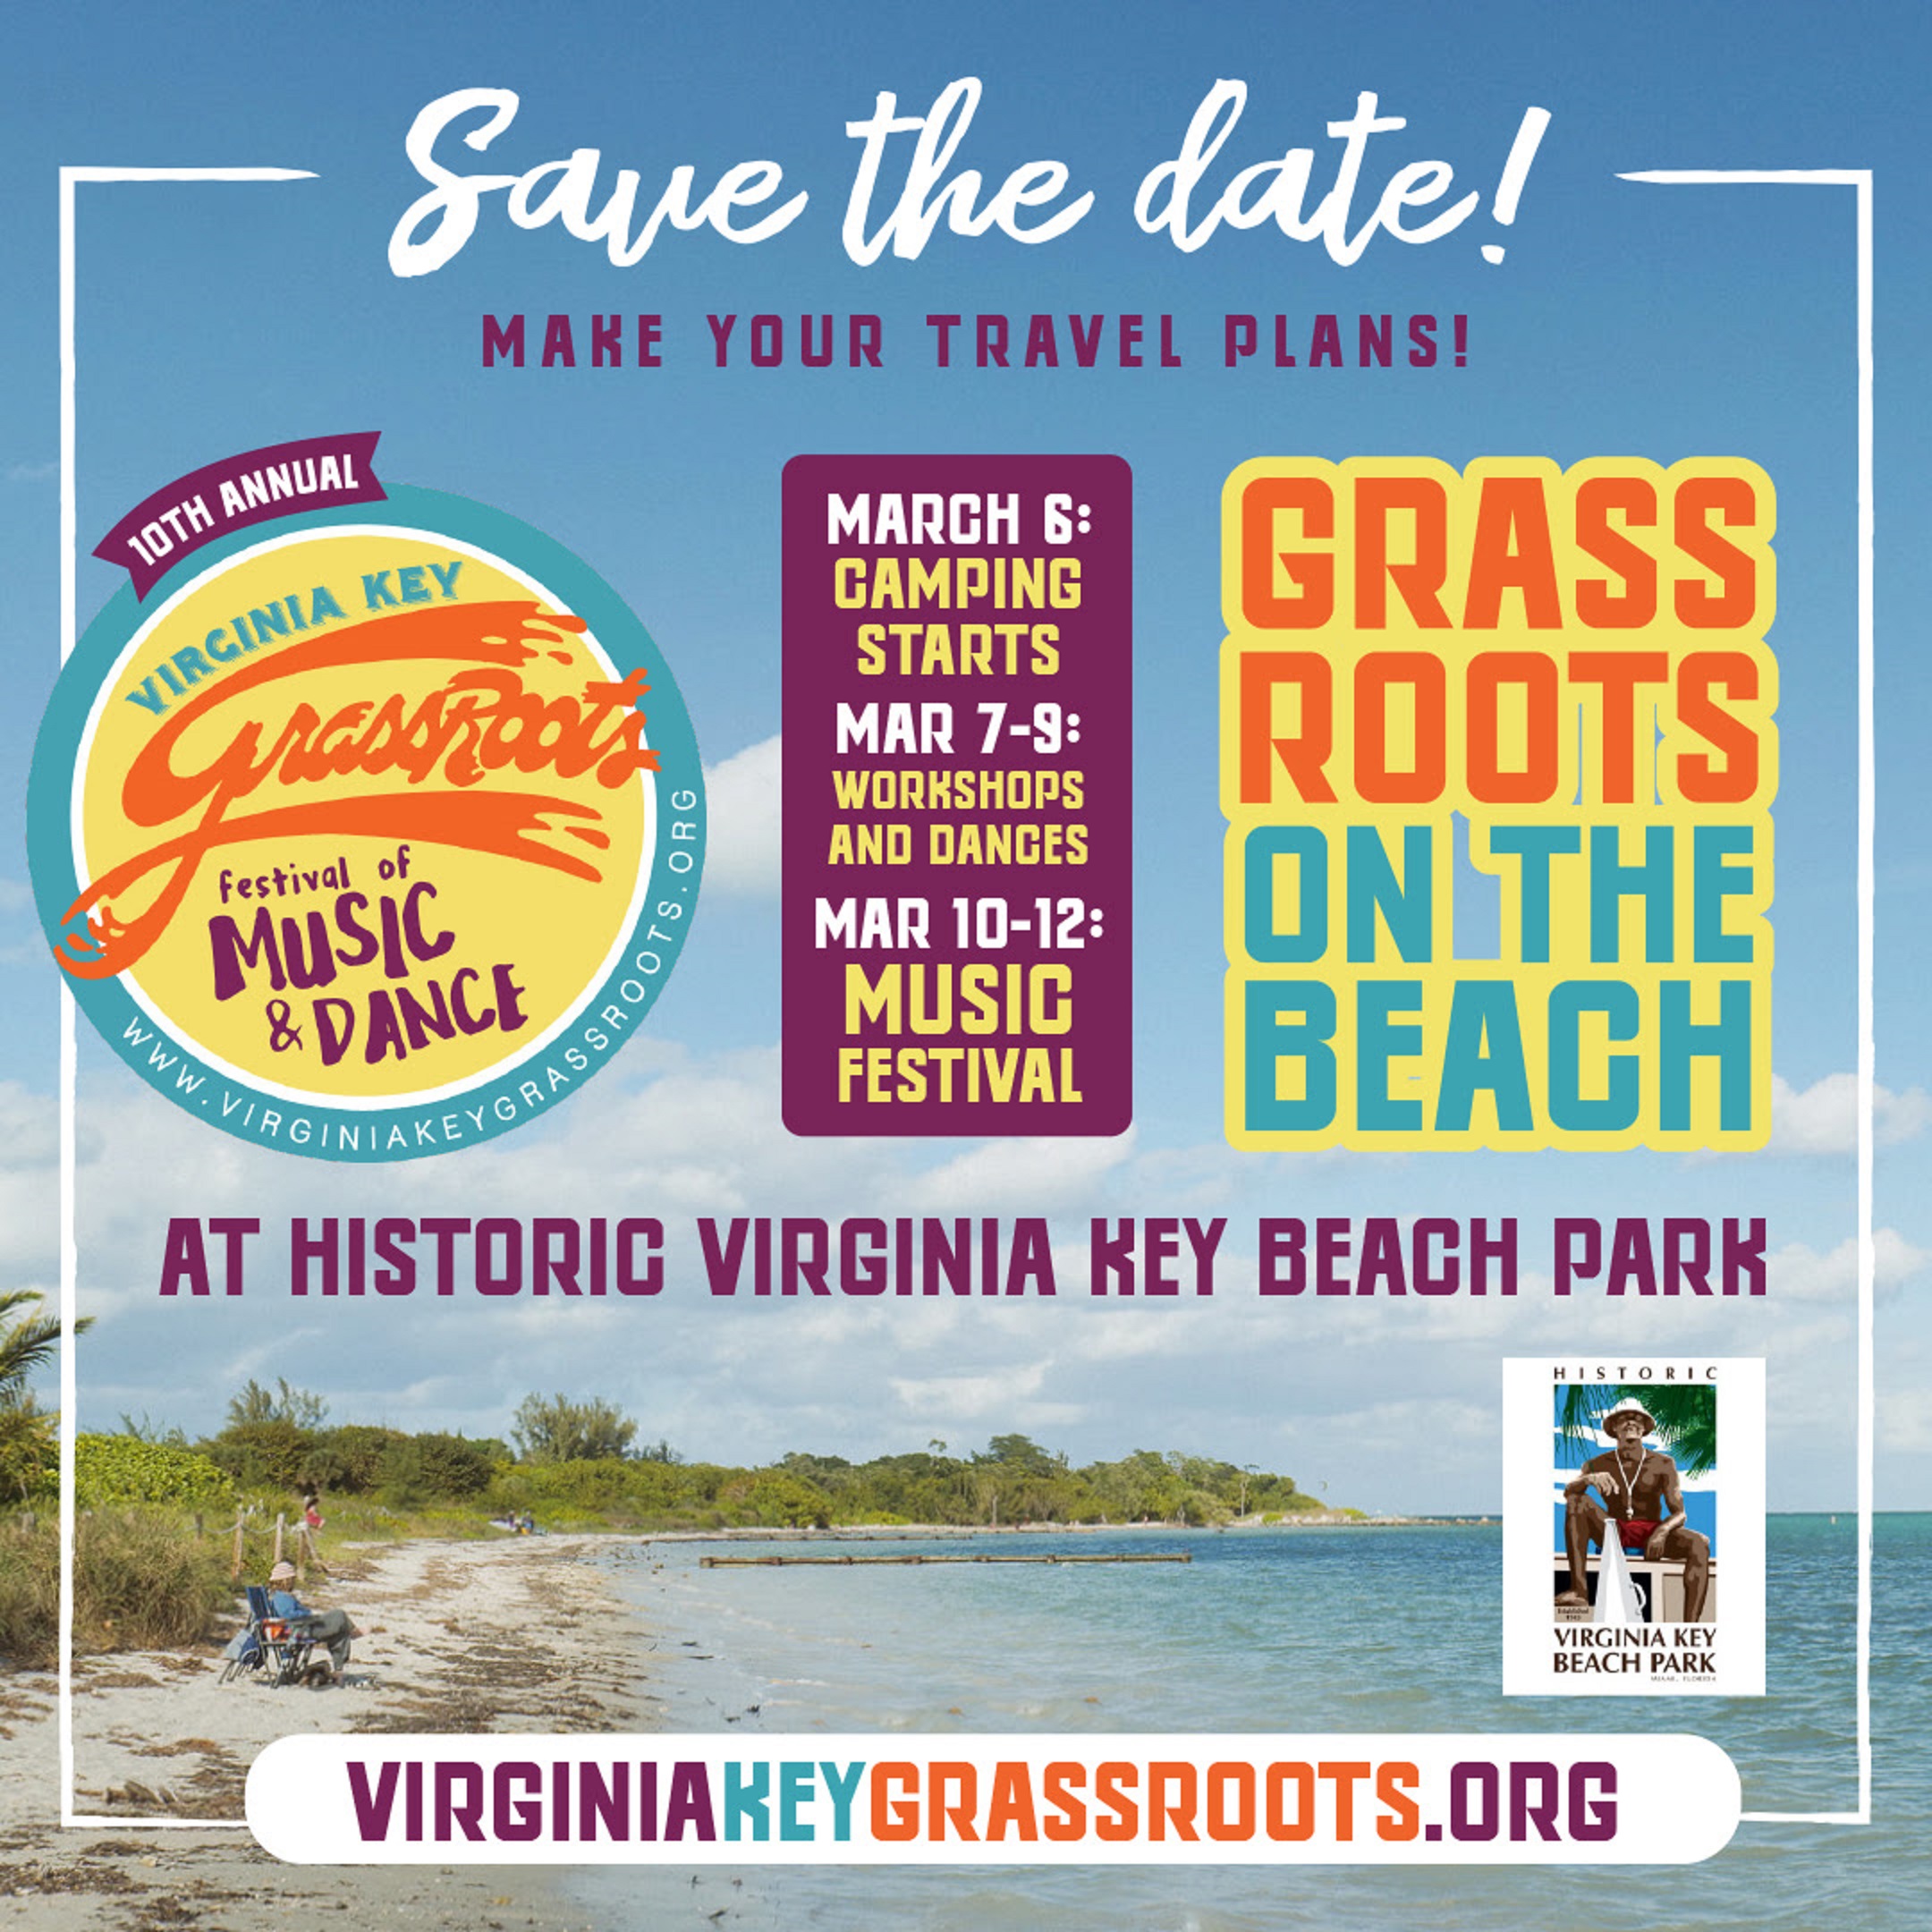 10th Annual Virginia Key GrassRoots Festival Dates Announced